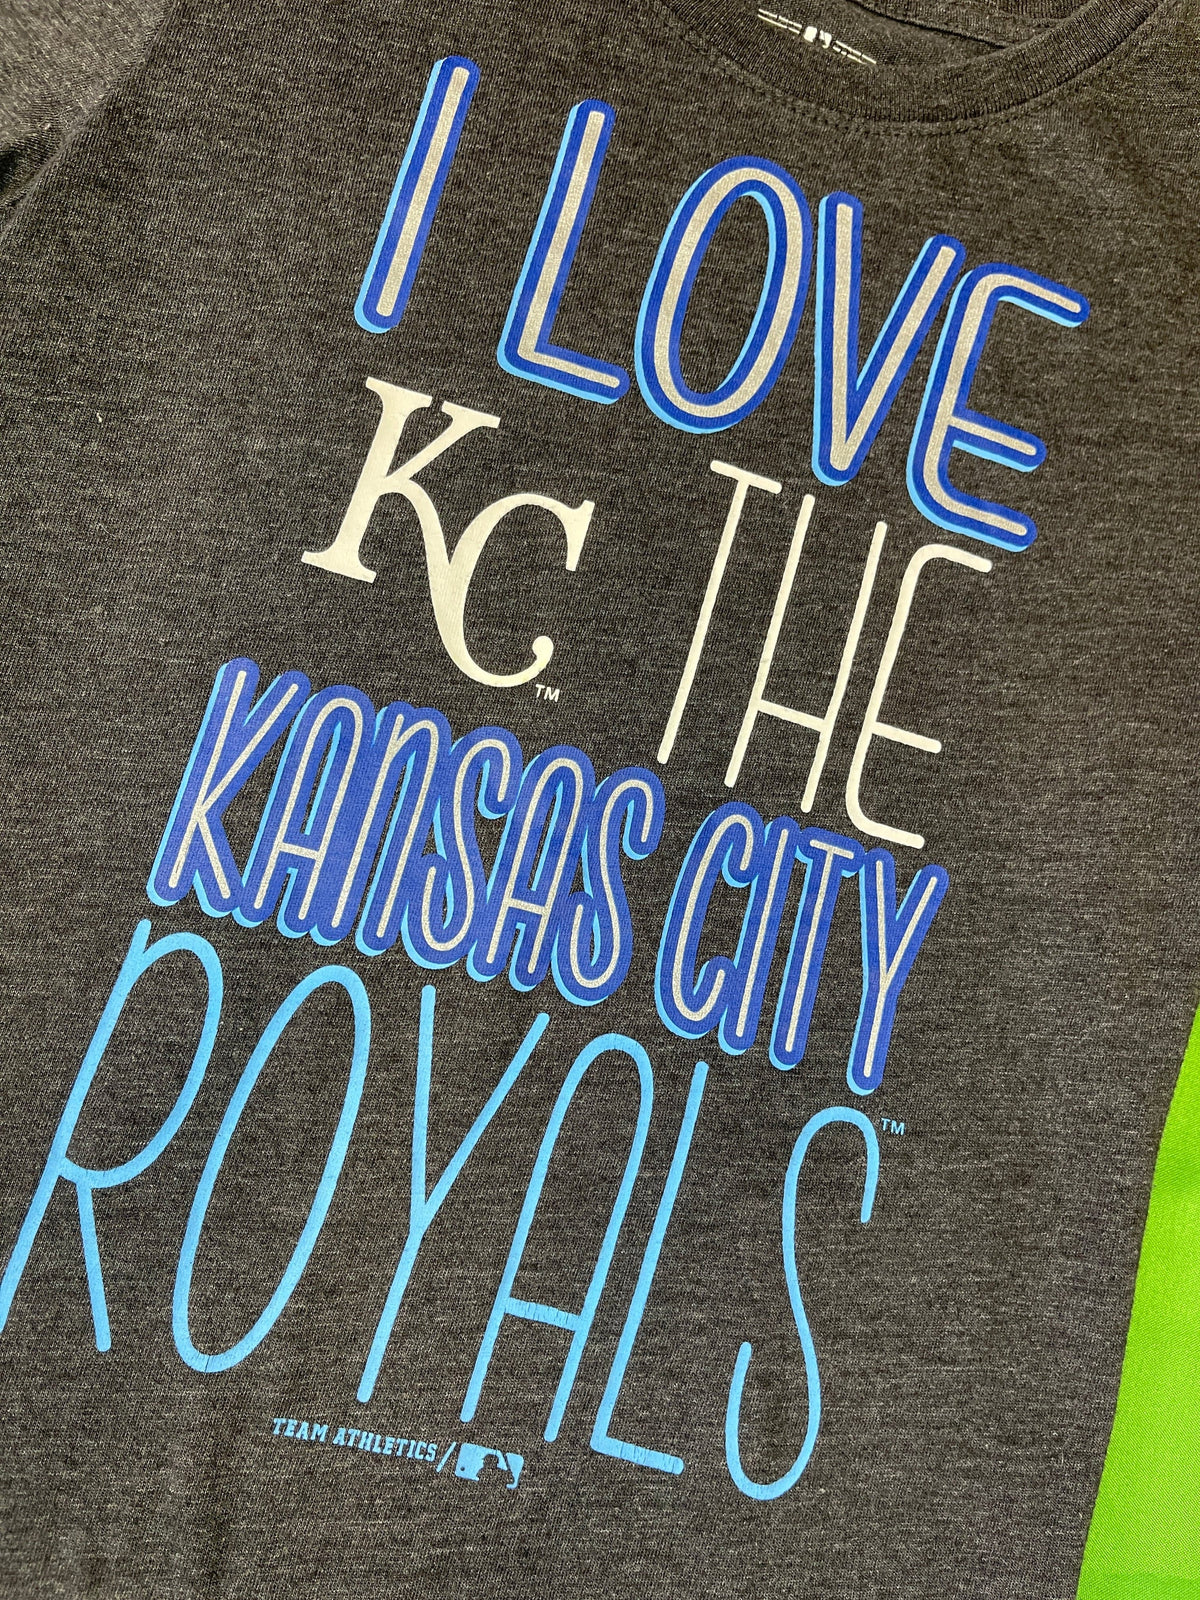 MLB Kansas City Royals Team Athletics Sparkly T-Shirt Youth Small 6